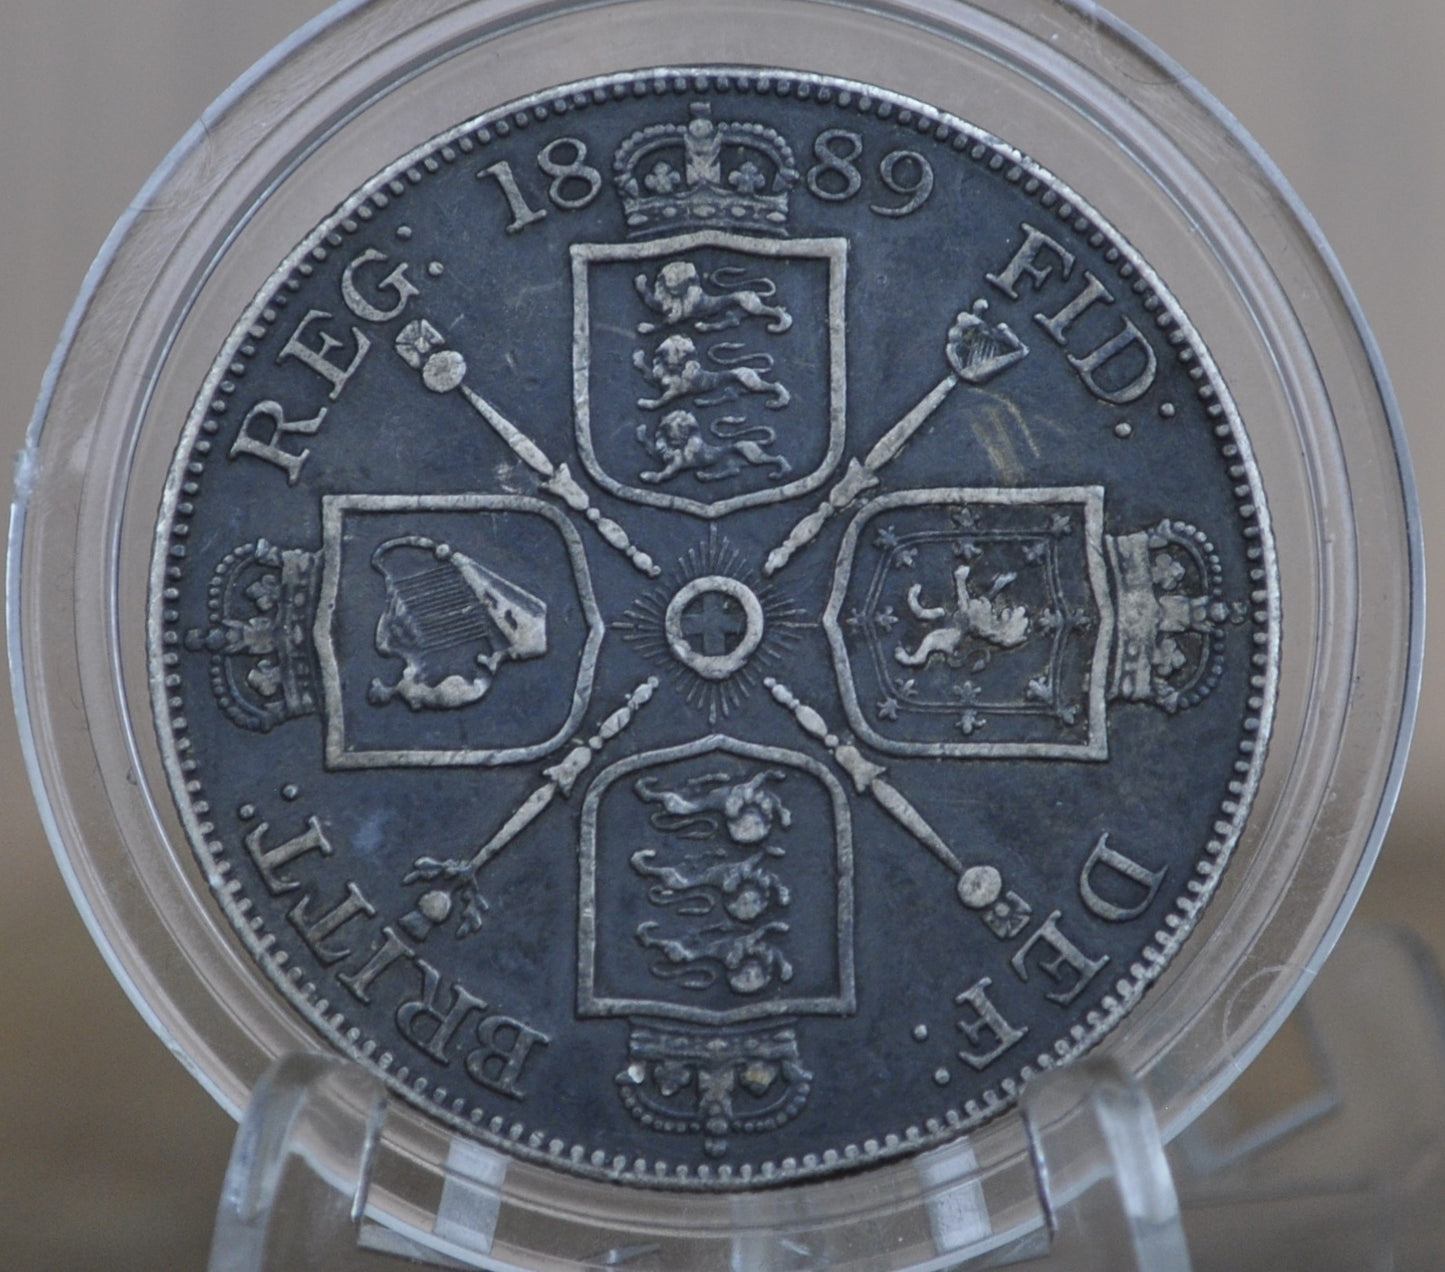 1889 Double Florin - XF Grade / Condition - UK Double Florin 1889 Silver - Queen Victoria - Low Mintage Coin